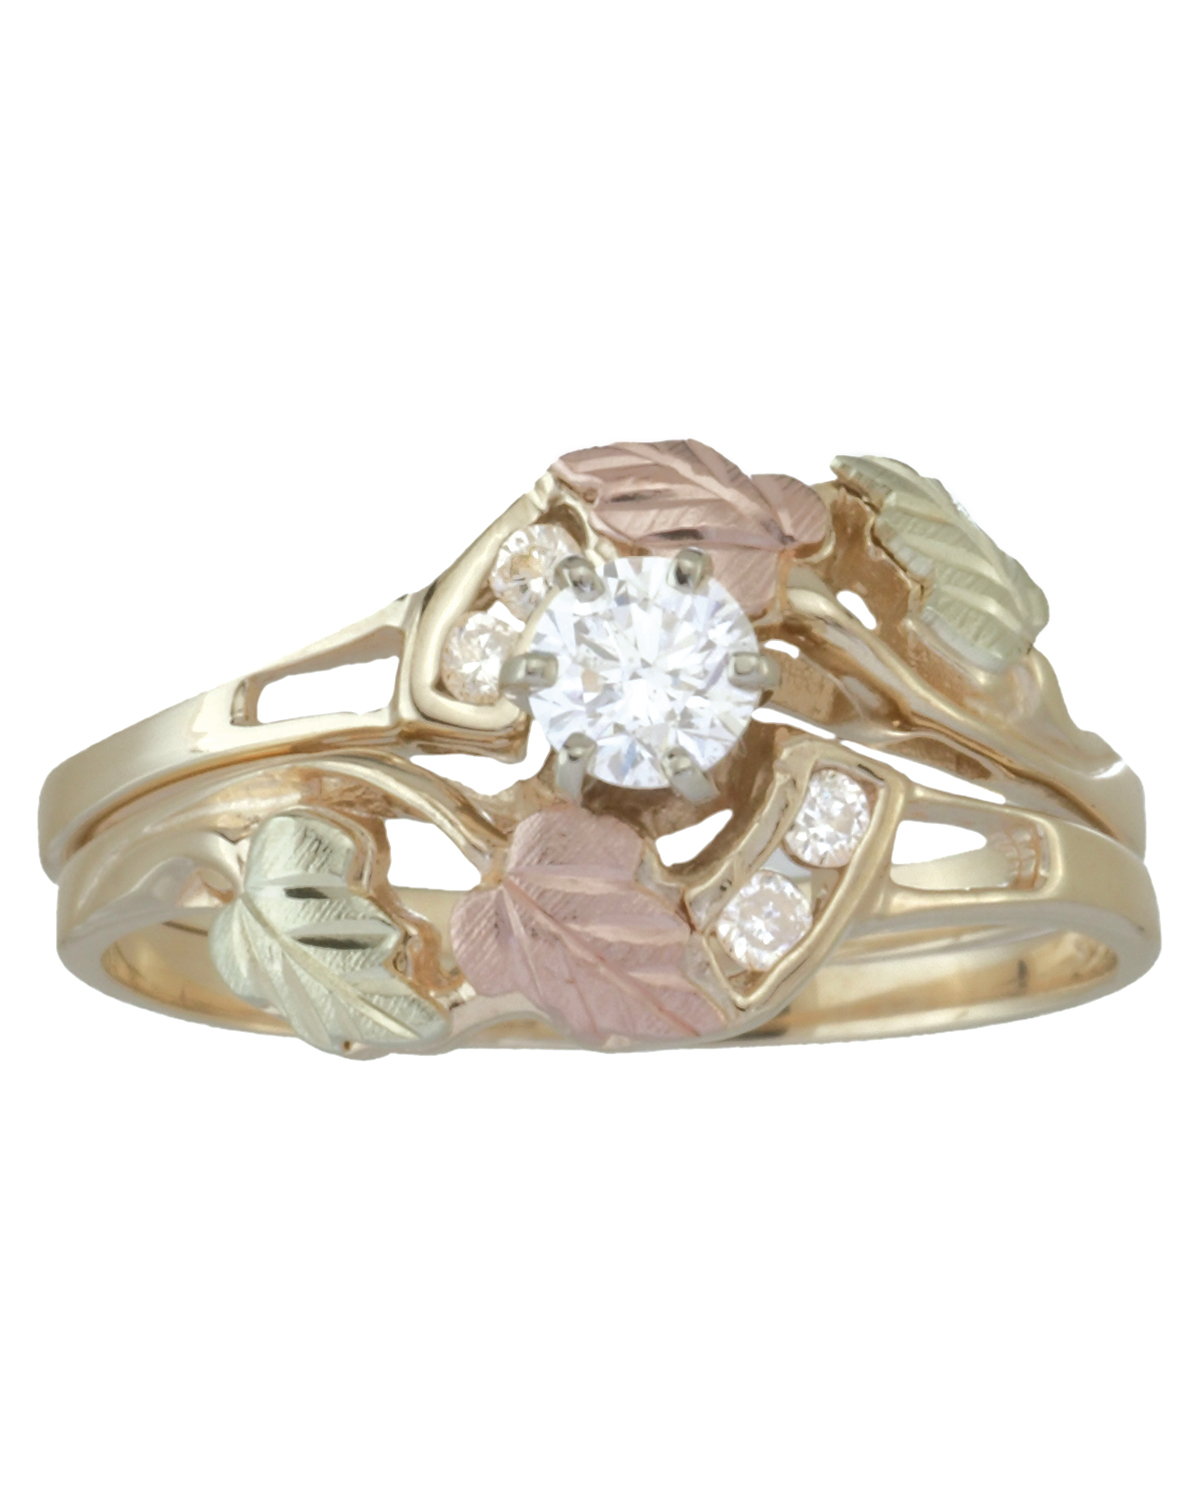  Diamond Engagement Wedding Ring Set, 10k Yellow Gold